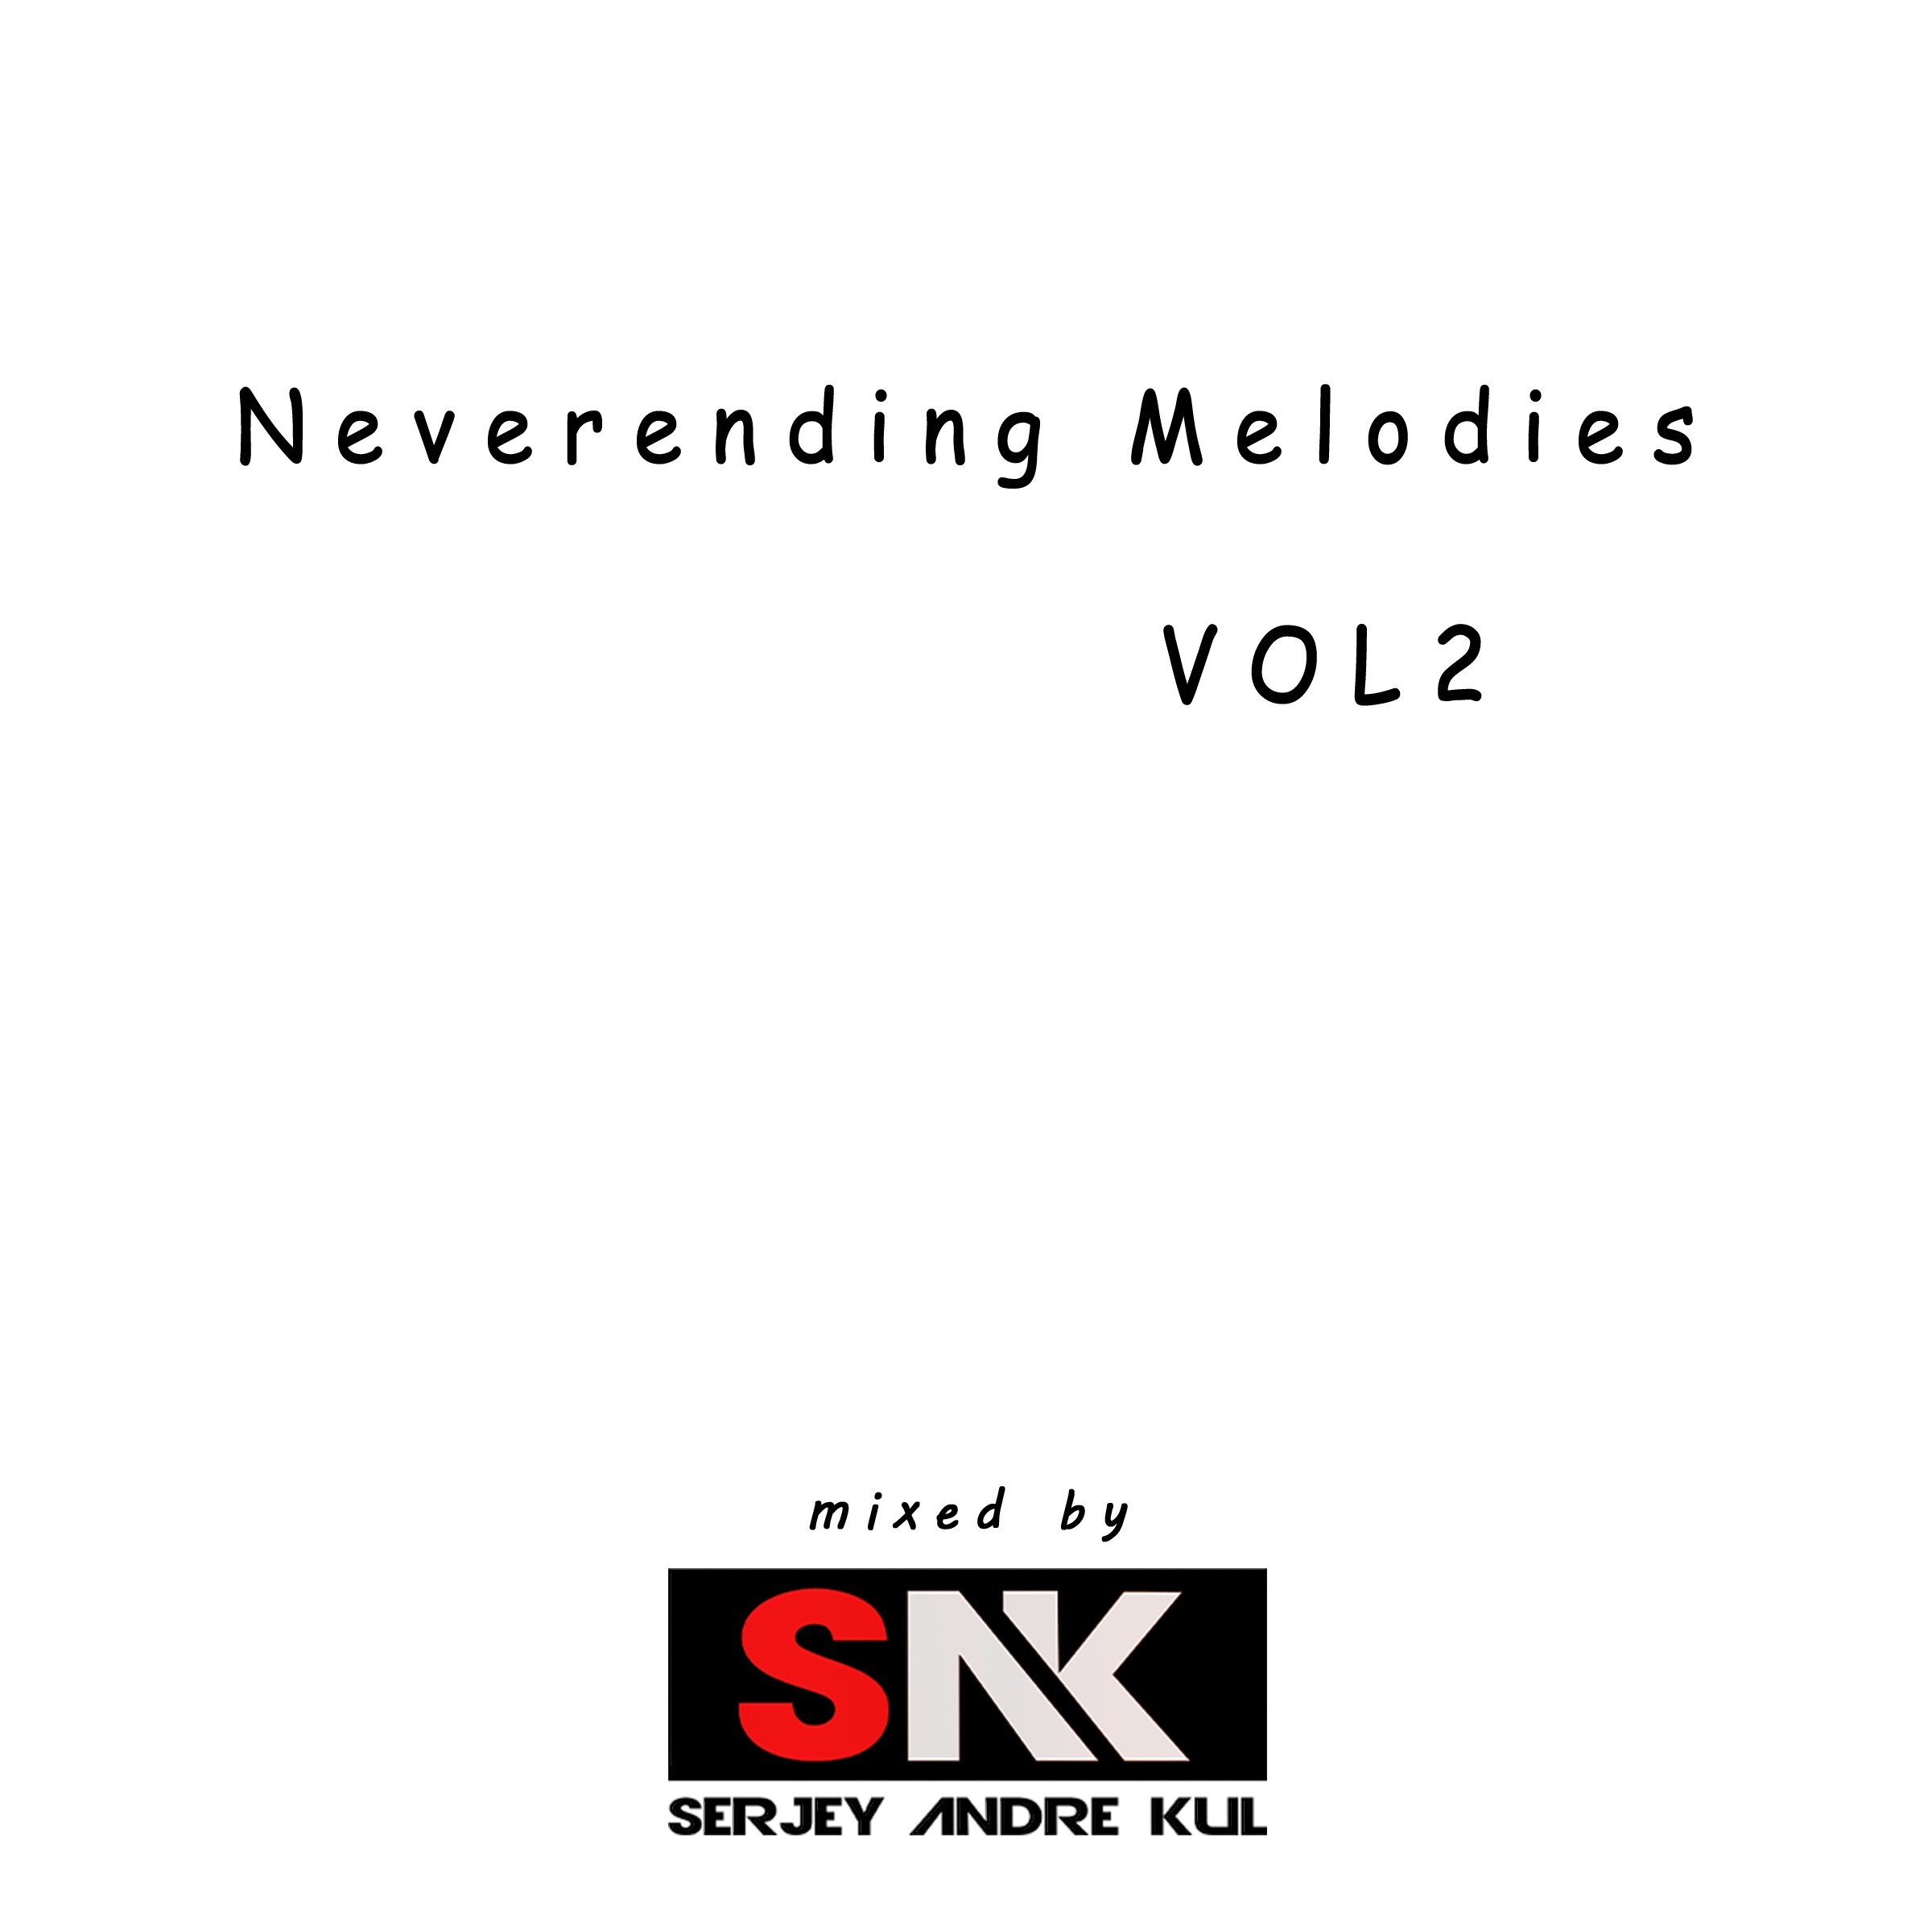 Neverending_Melodies_vol_2_35zqwg.jpg